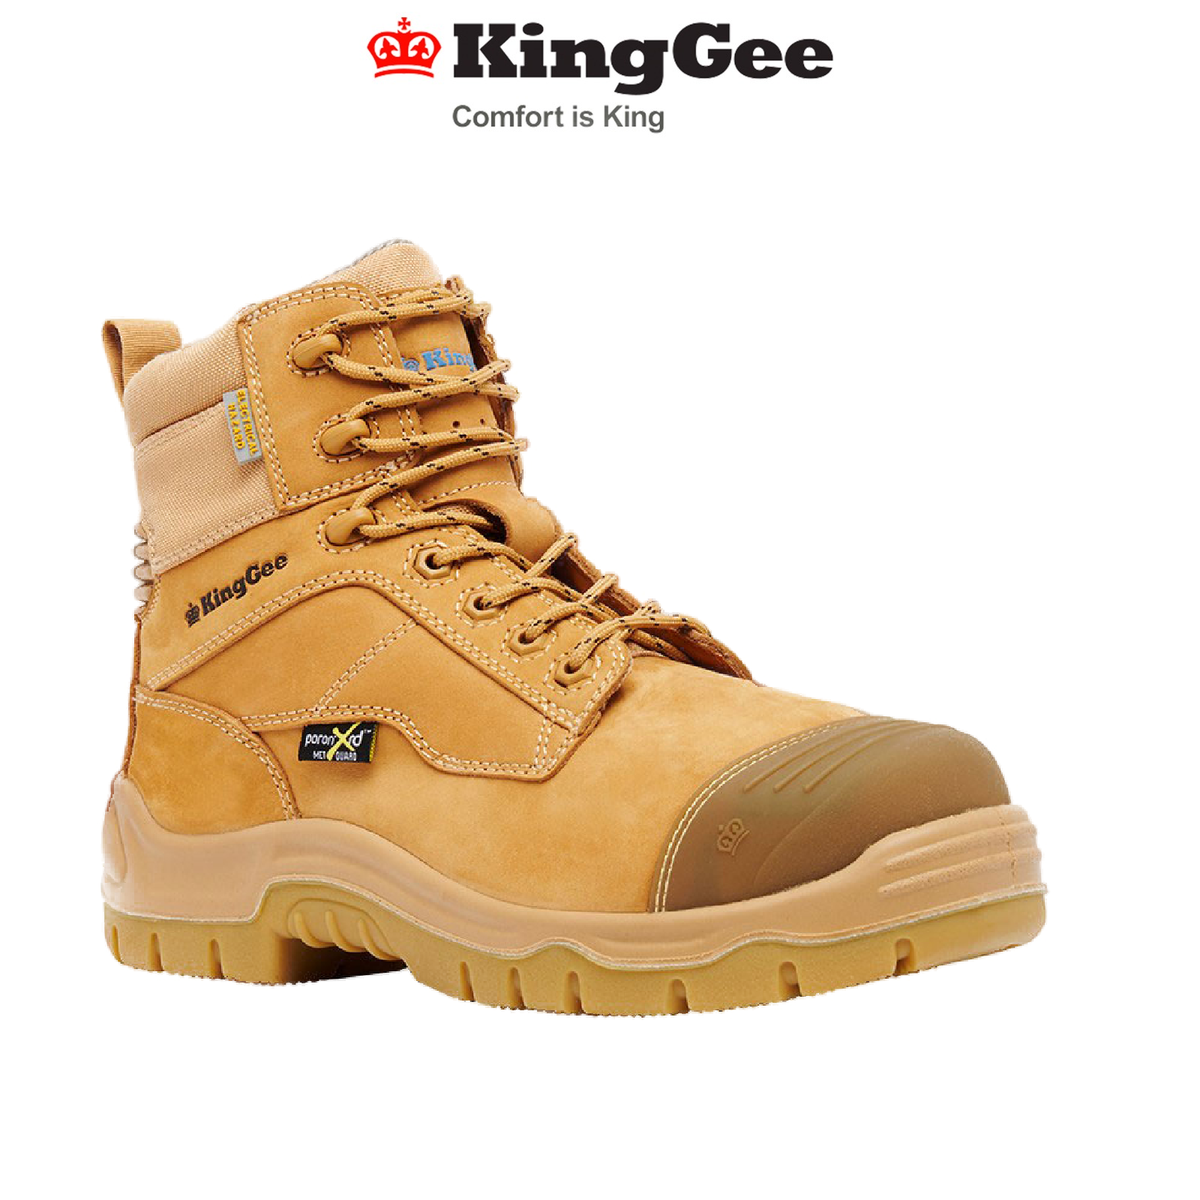 KingGee Mens Phoenix 6C EH MET Work Safety Boots Water Resistant Leather K27872